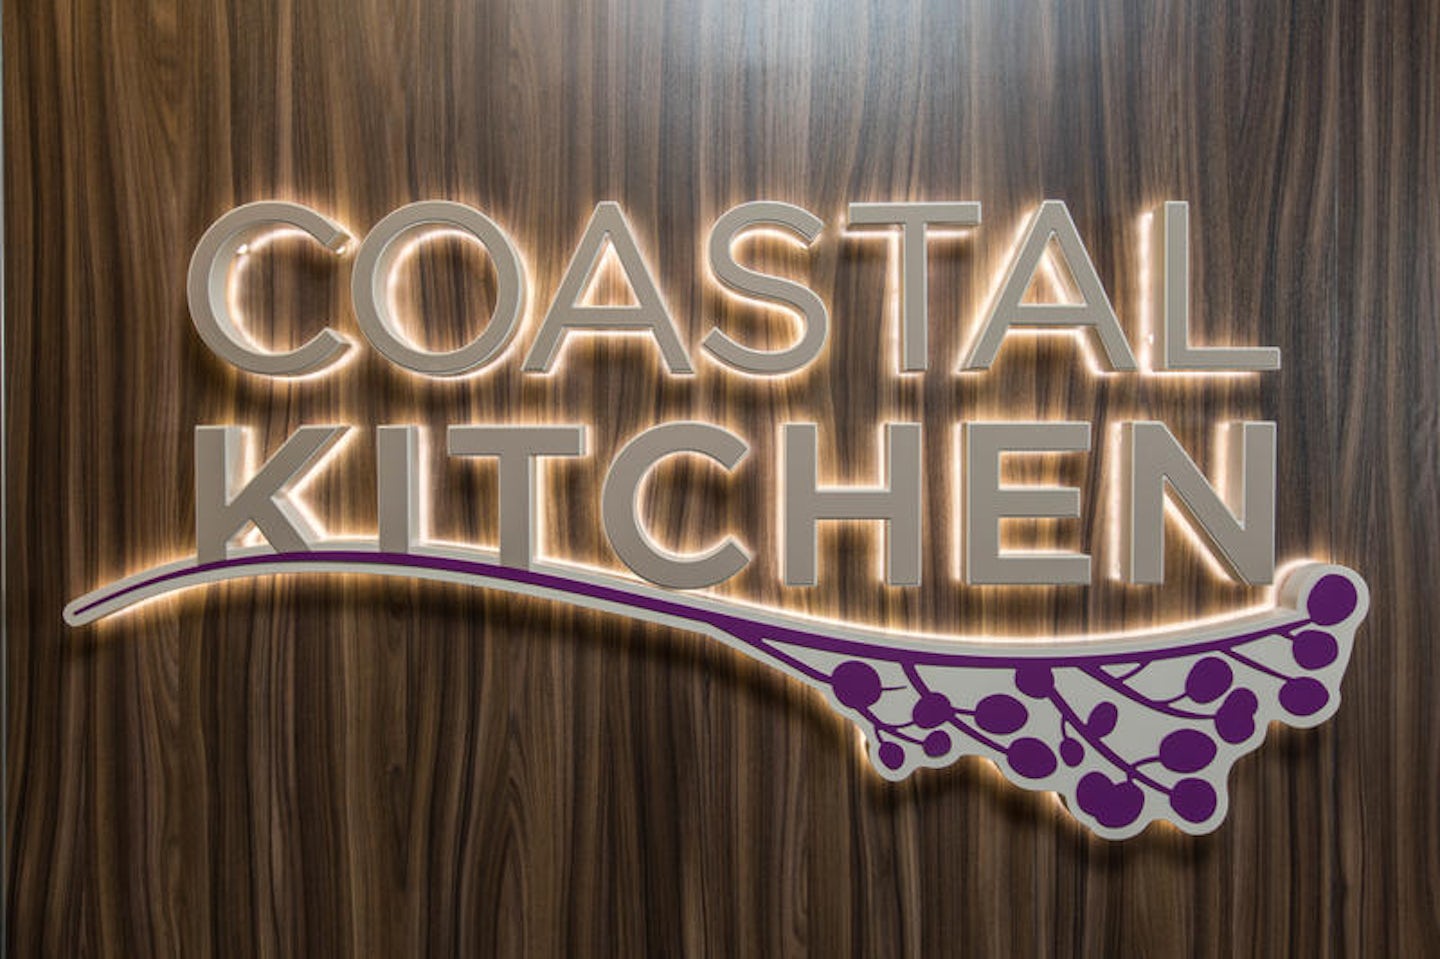 Coastal Kitchen on Harmony of the Seas